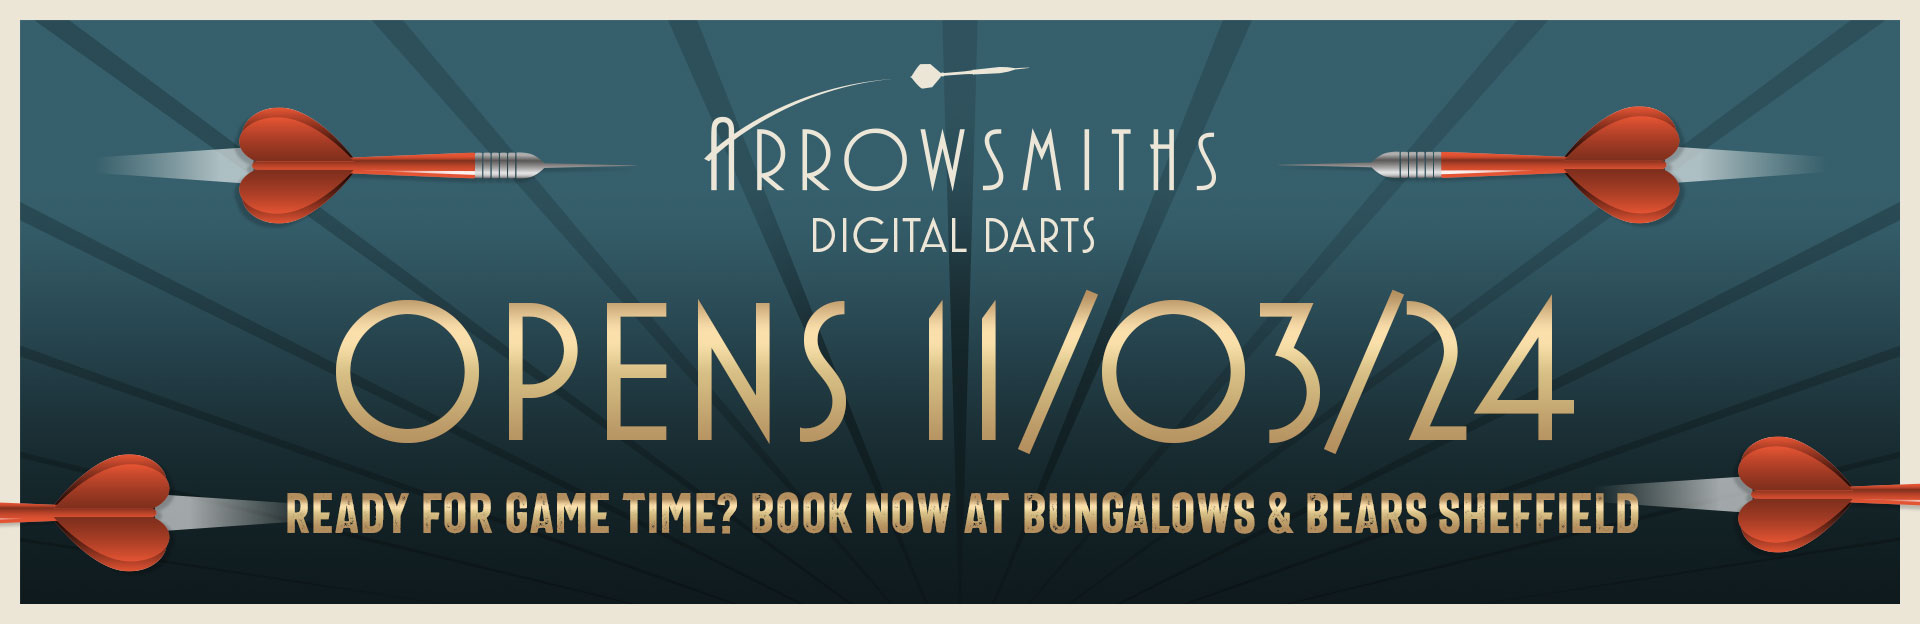 hs-2023-arrowsmiths-bungalowsandbears-open-banner (1).jpg